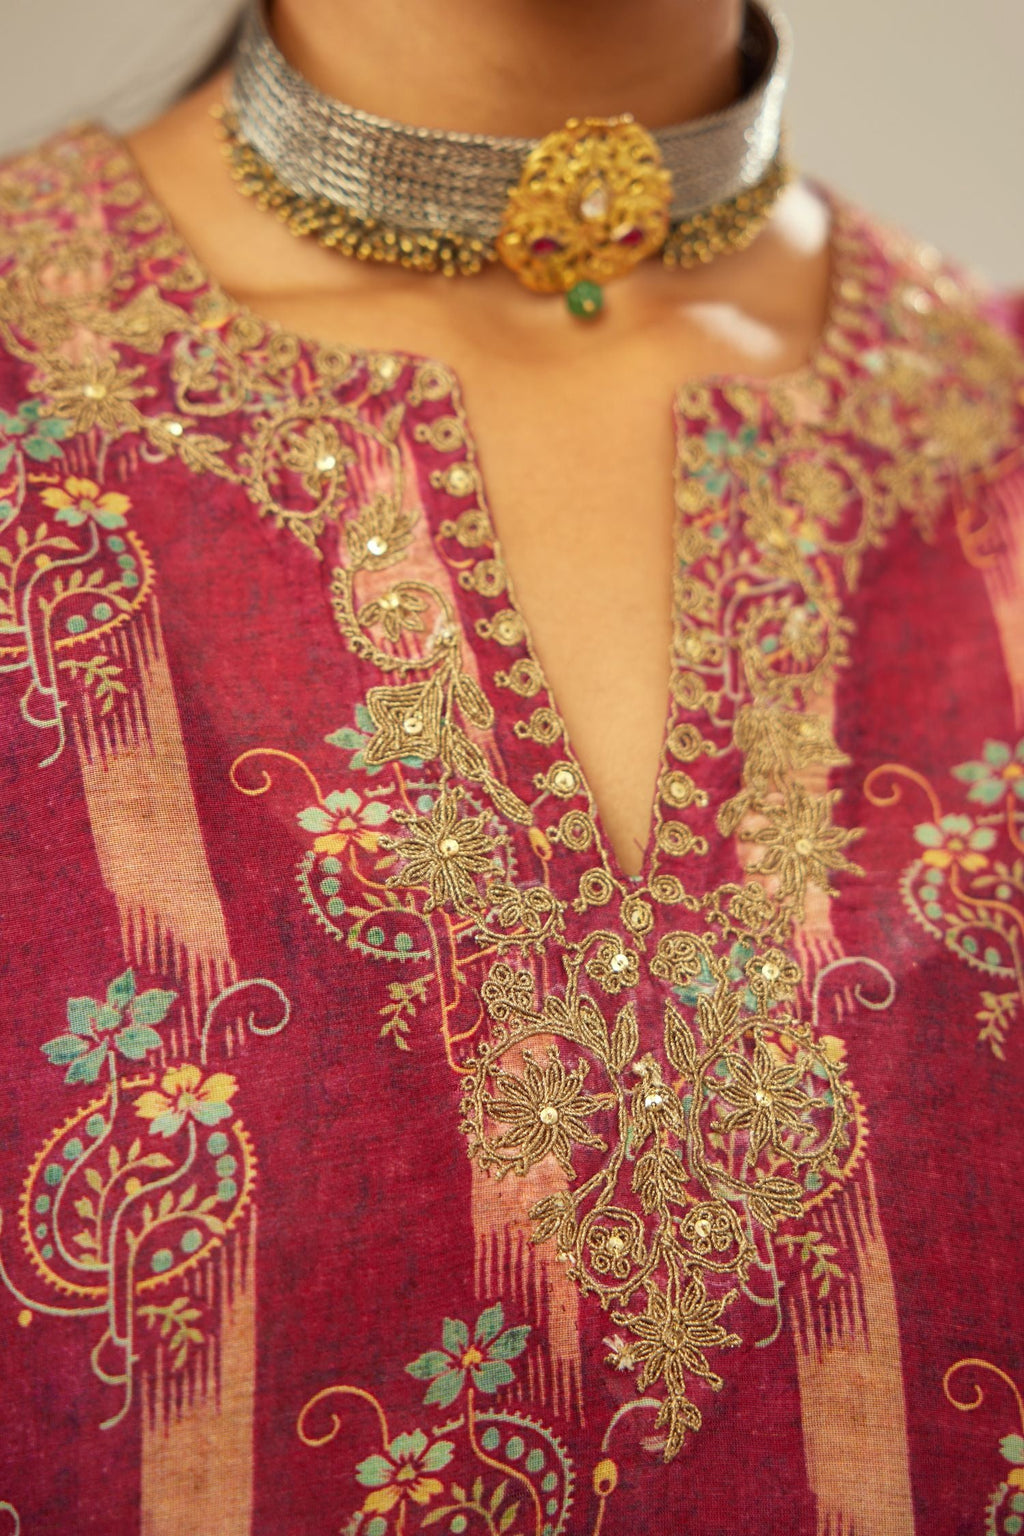 Deep wine digital printed dori embroidered fine silk short kurta set, highlighted with gold sequin hand work.